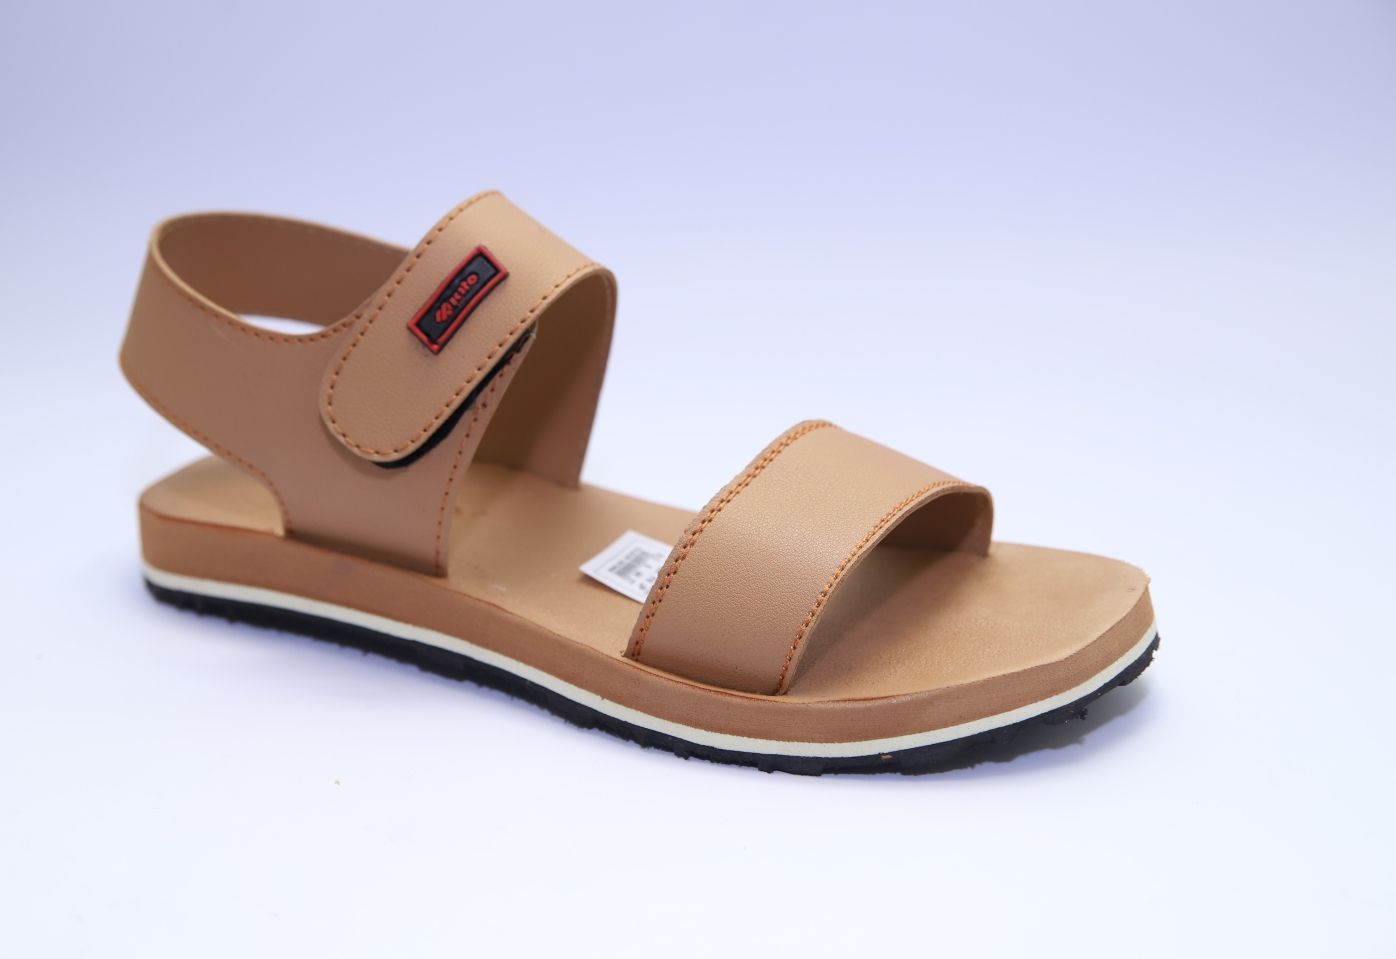 Buy Bata Sandals Online | lazada.sg Oct 2023